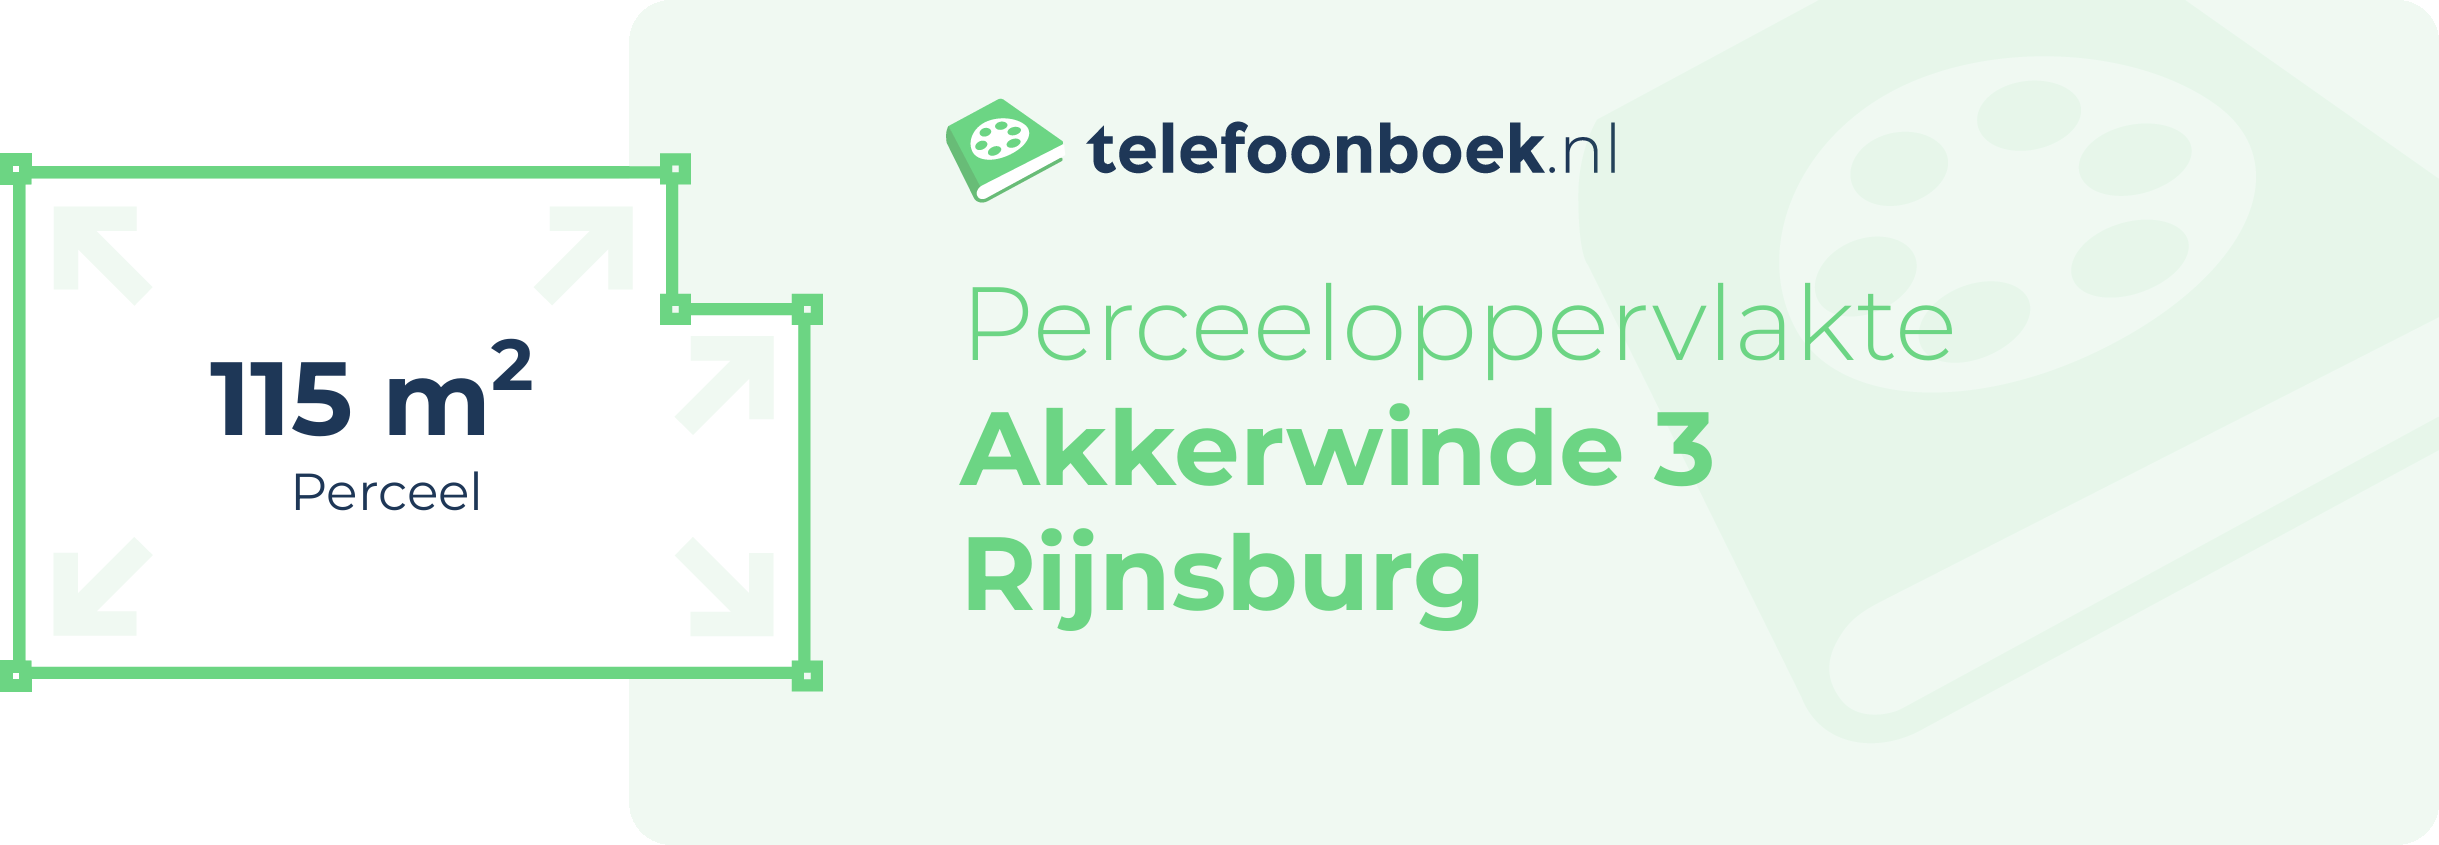 Perceeloppervlakte Akkerwinde 3 Rijnsburg